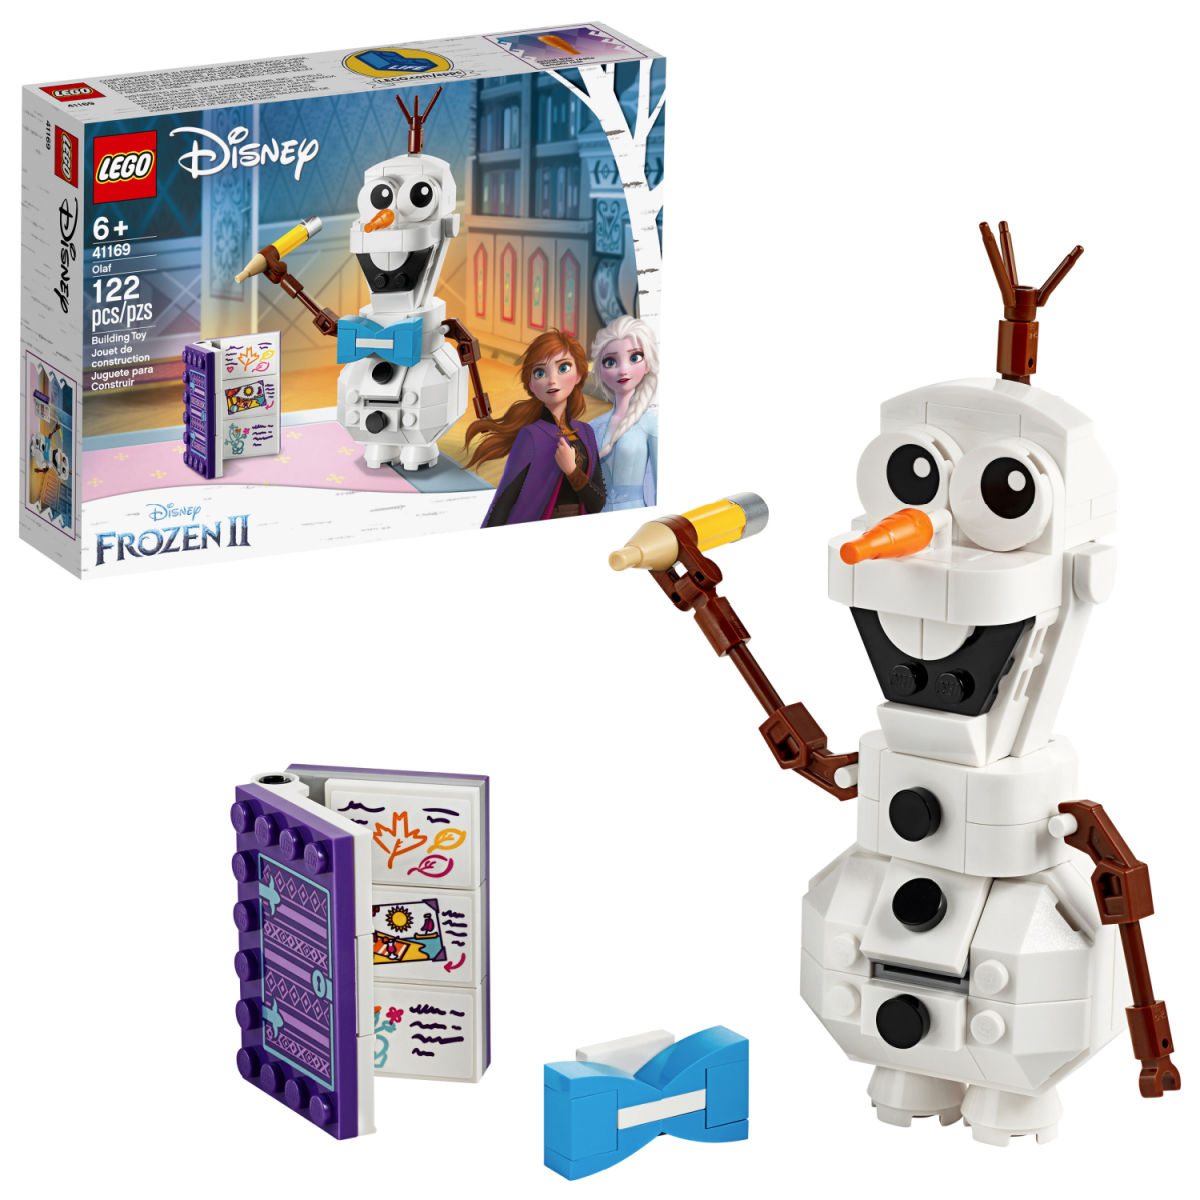 LEGO Disney Frozen II Olaf the Snowman 41169 Building Toy